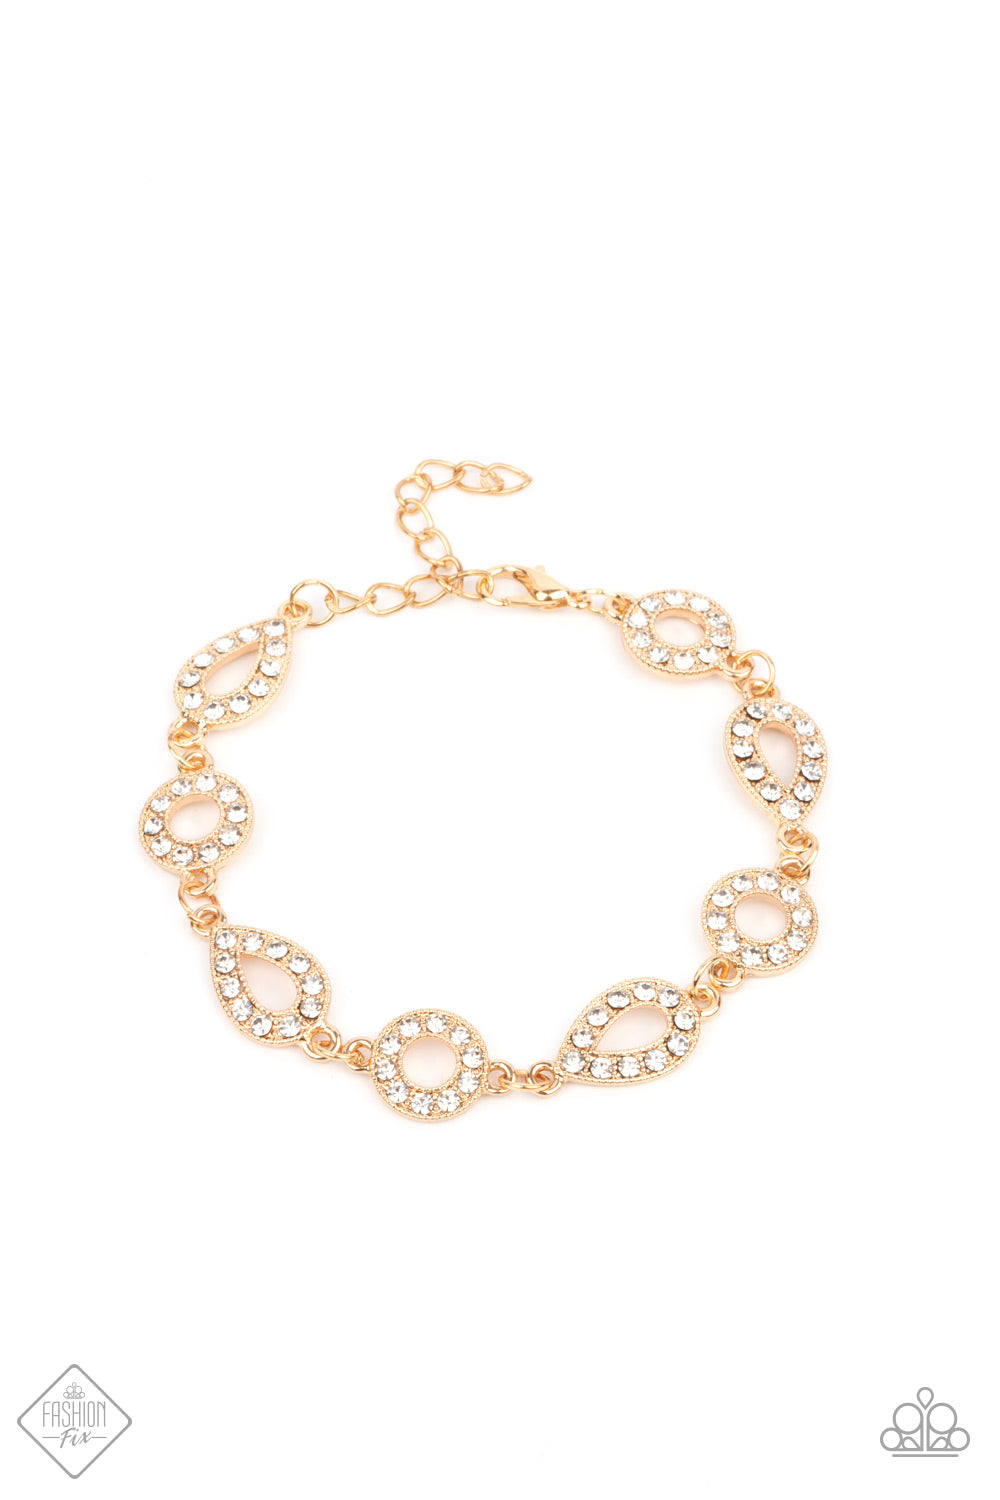 Paparazzi Accessories - Royally Refined - Gold Bracelet April Fashion Fix 2021